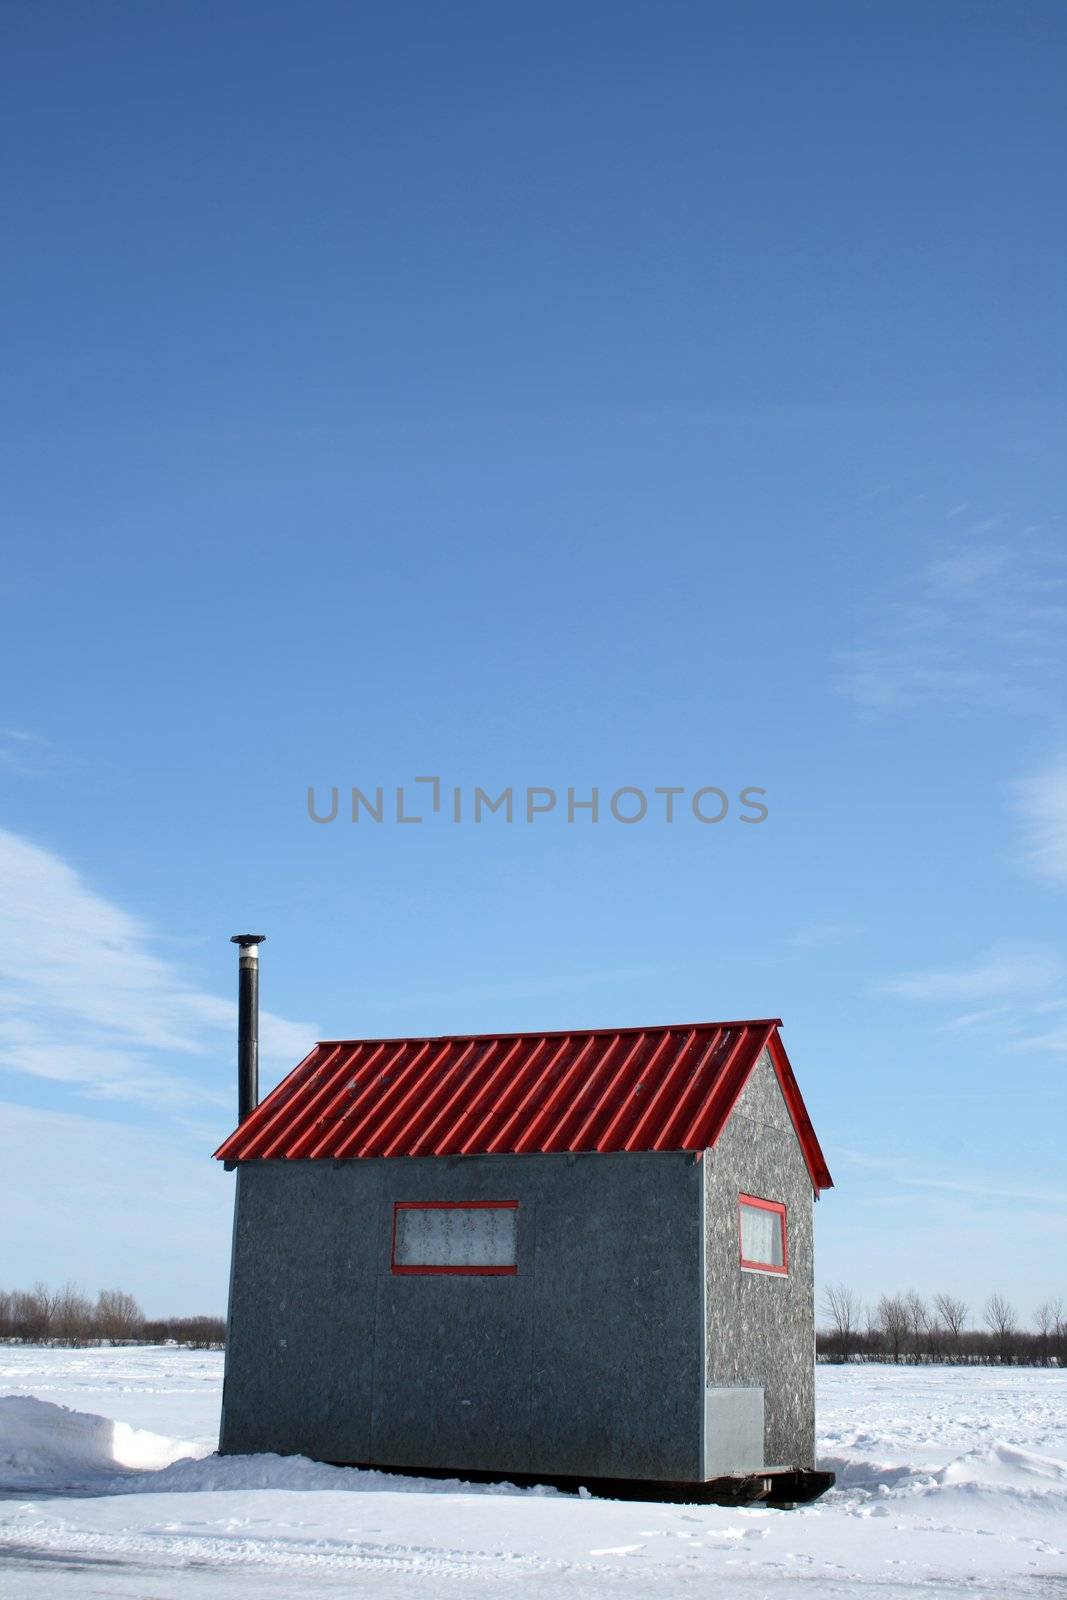 Ice fishing hut under the blue sky by anikasalsera